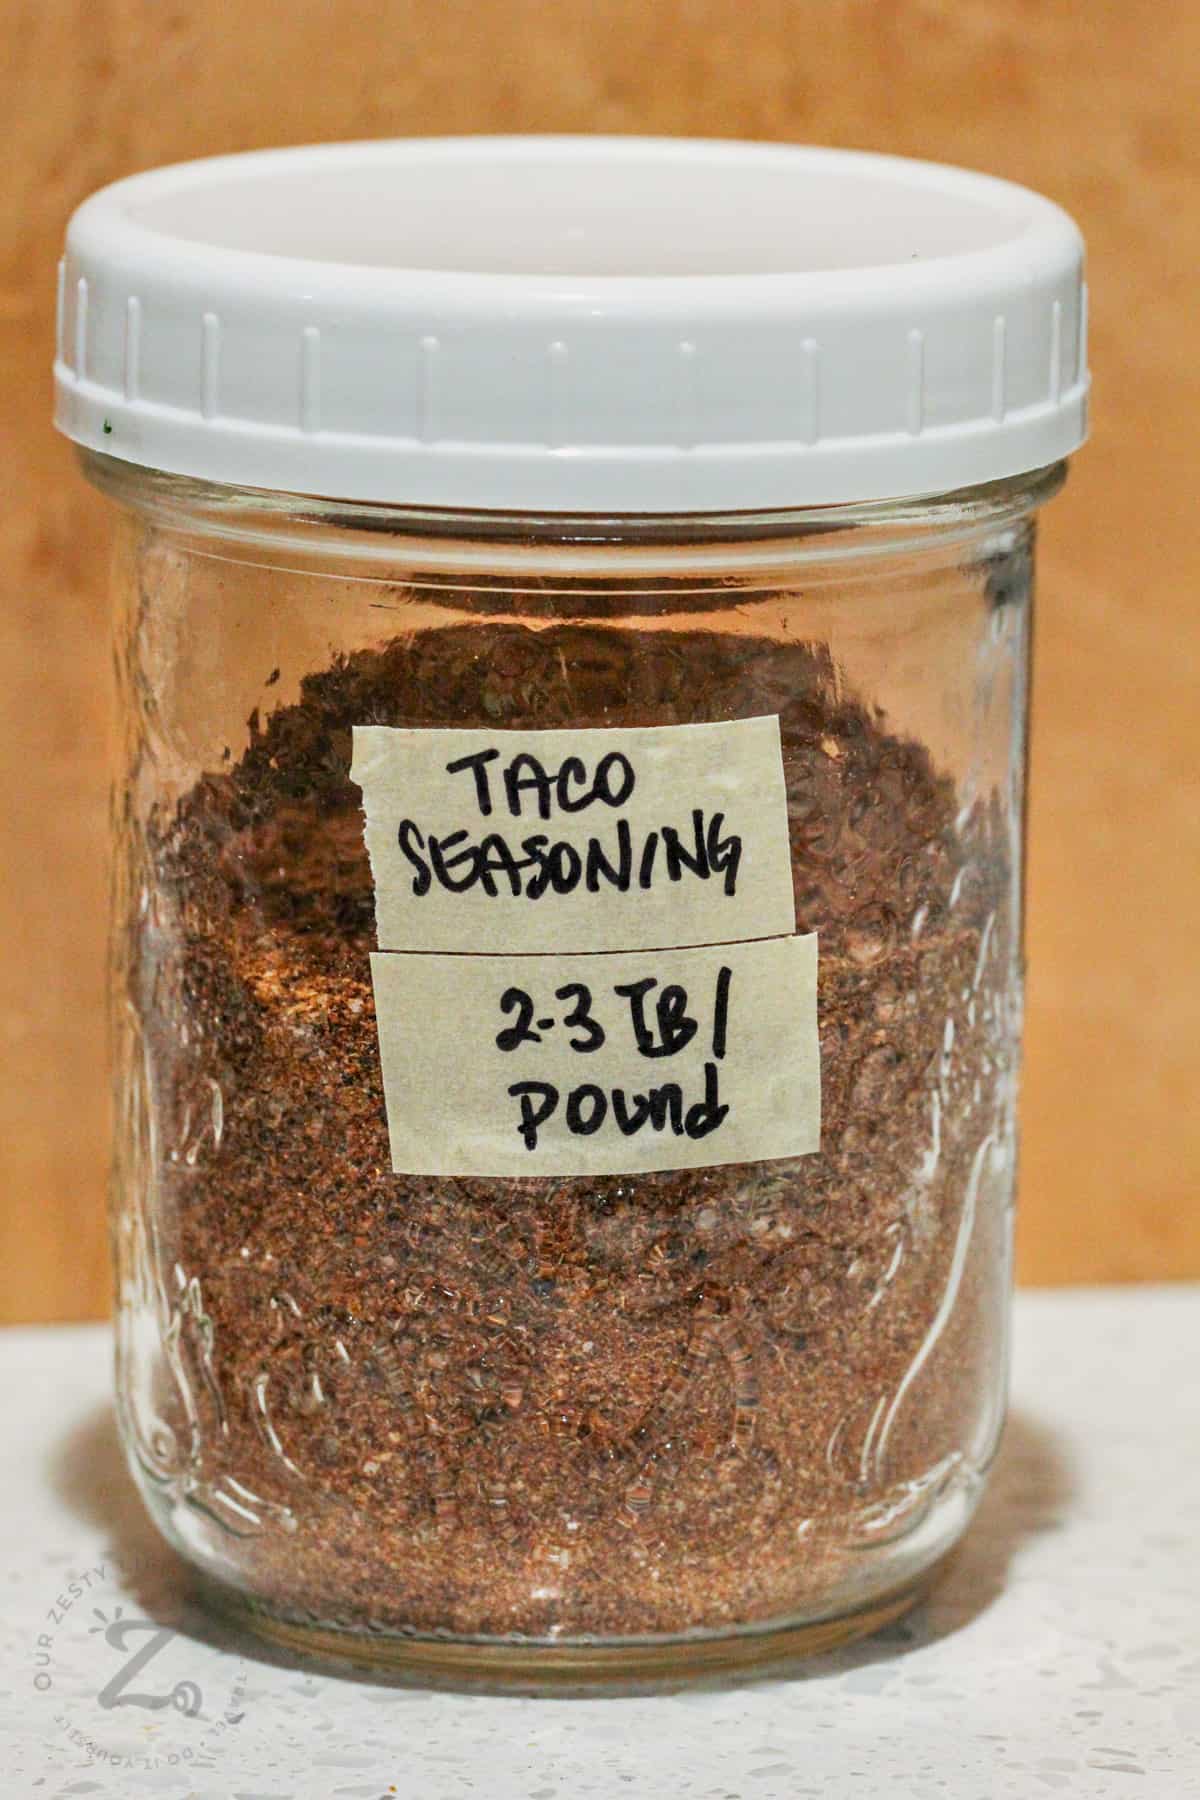 Taco Seasoning on a jar with label